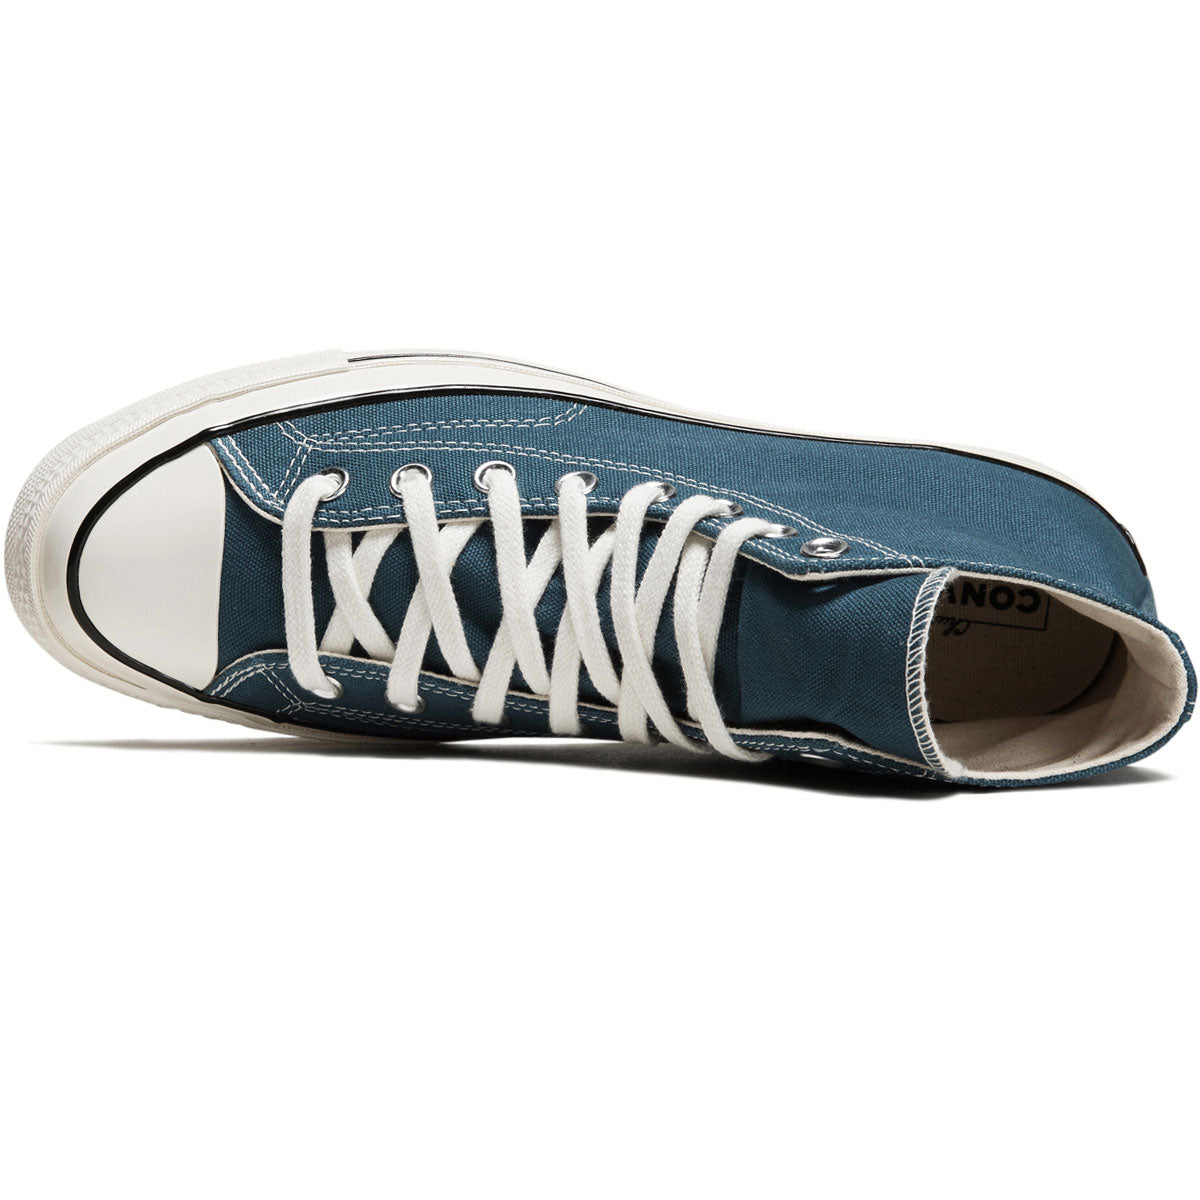 Converse Chuck 70 Hi Shoes - Teal Universe/Egret/Black image 3